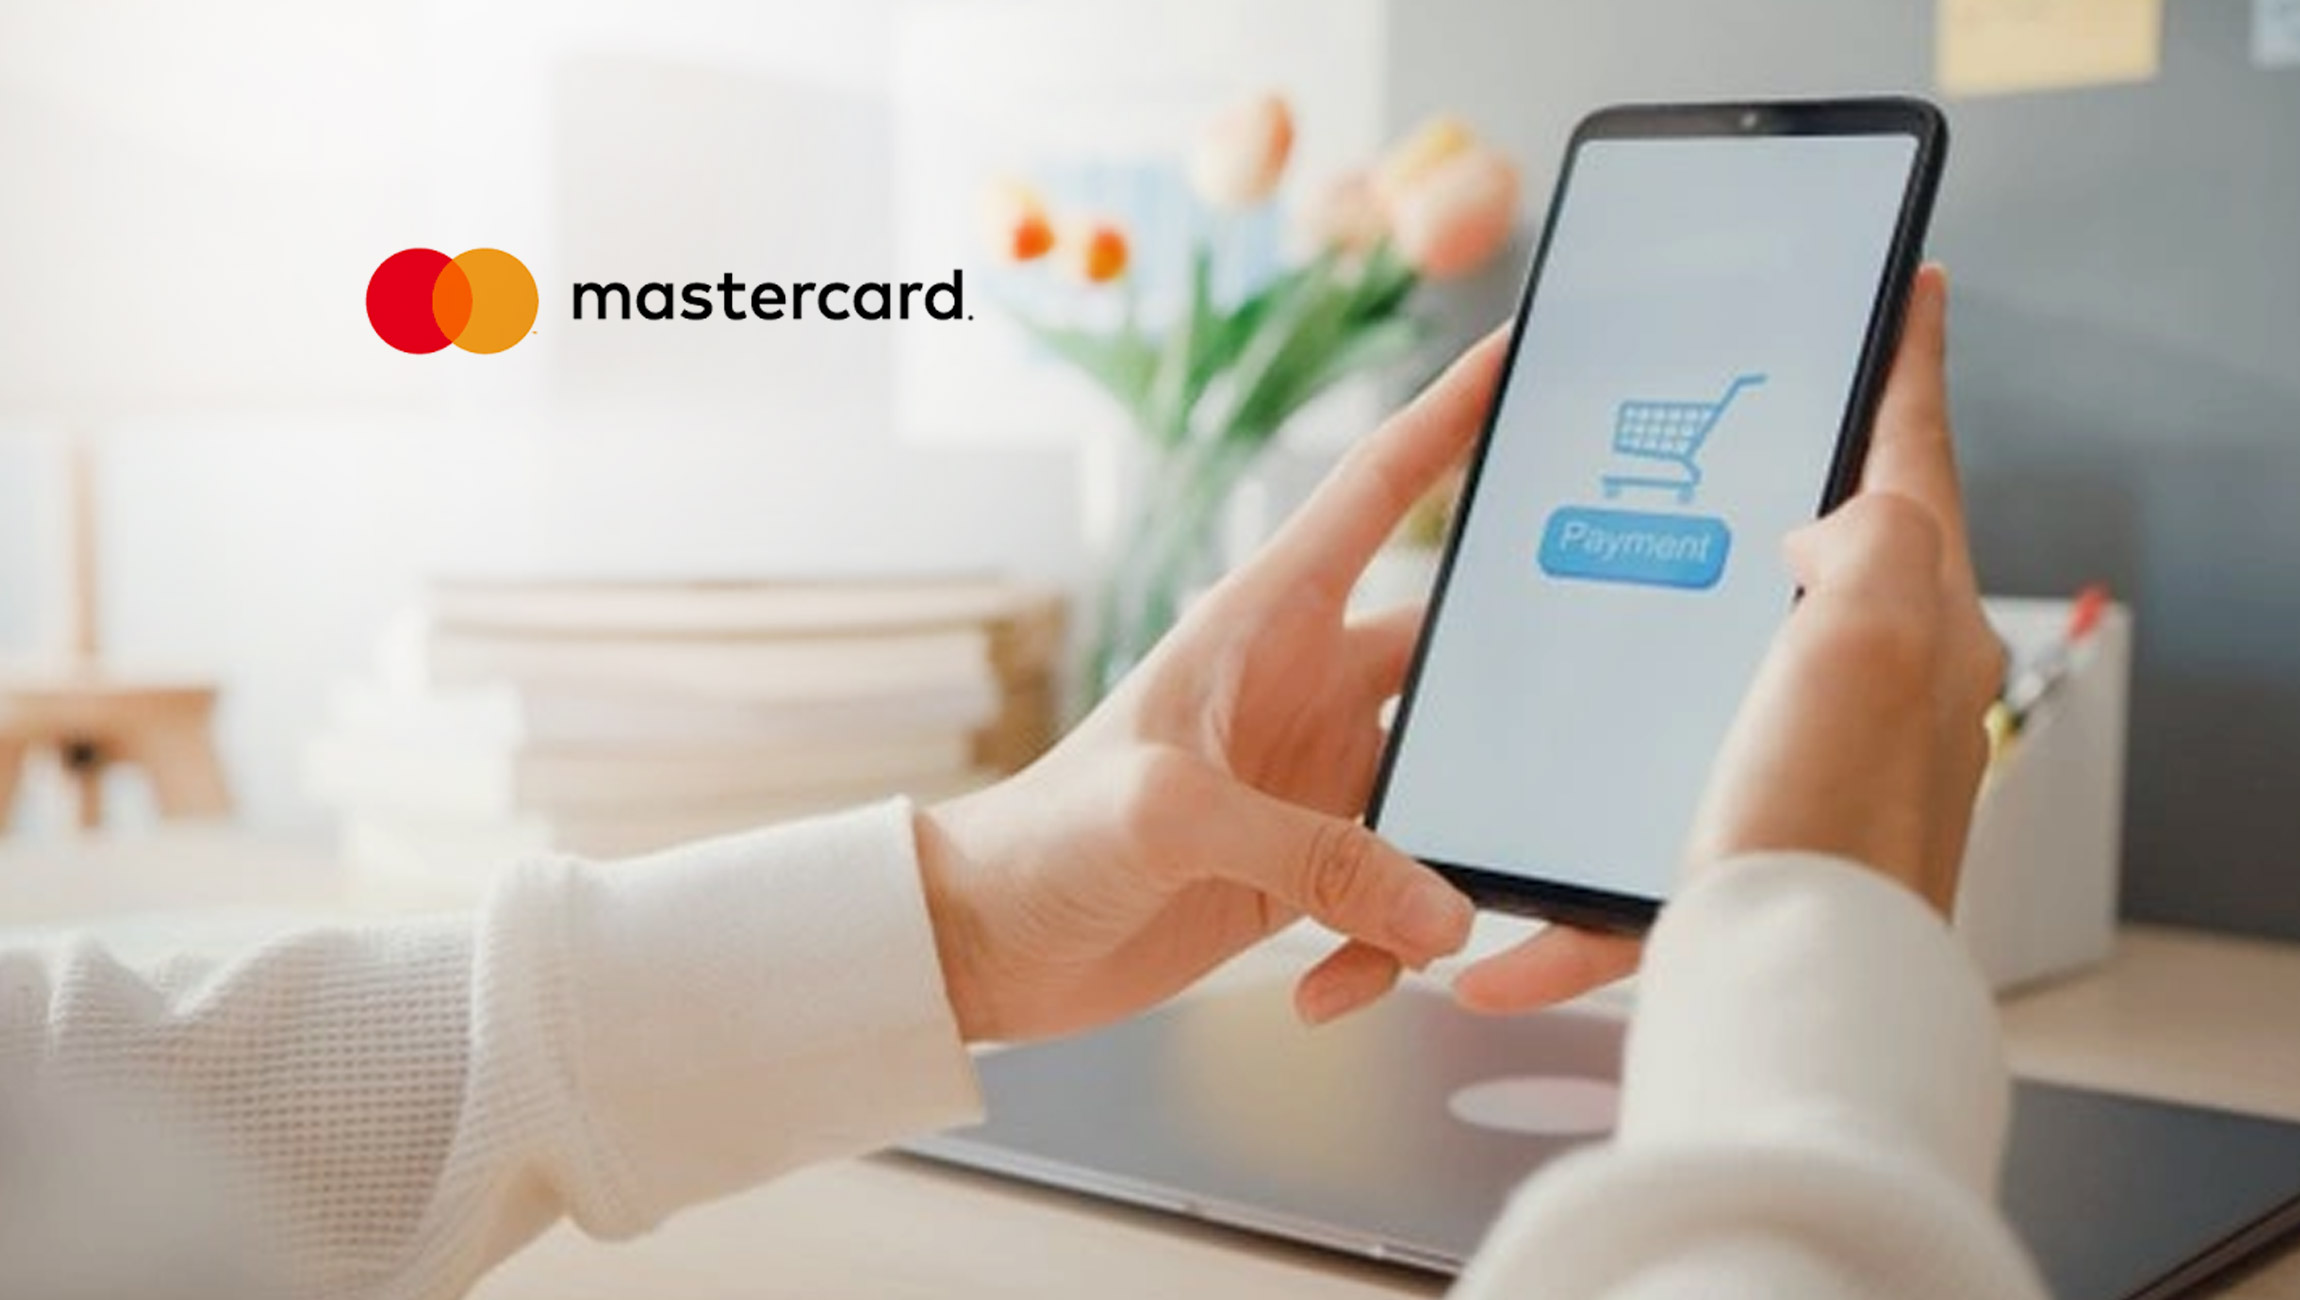 Mastercard SpendingPulse: U.S. Retail Sales Expected to Grow 7.1%* This Holiday Season